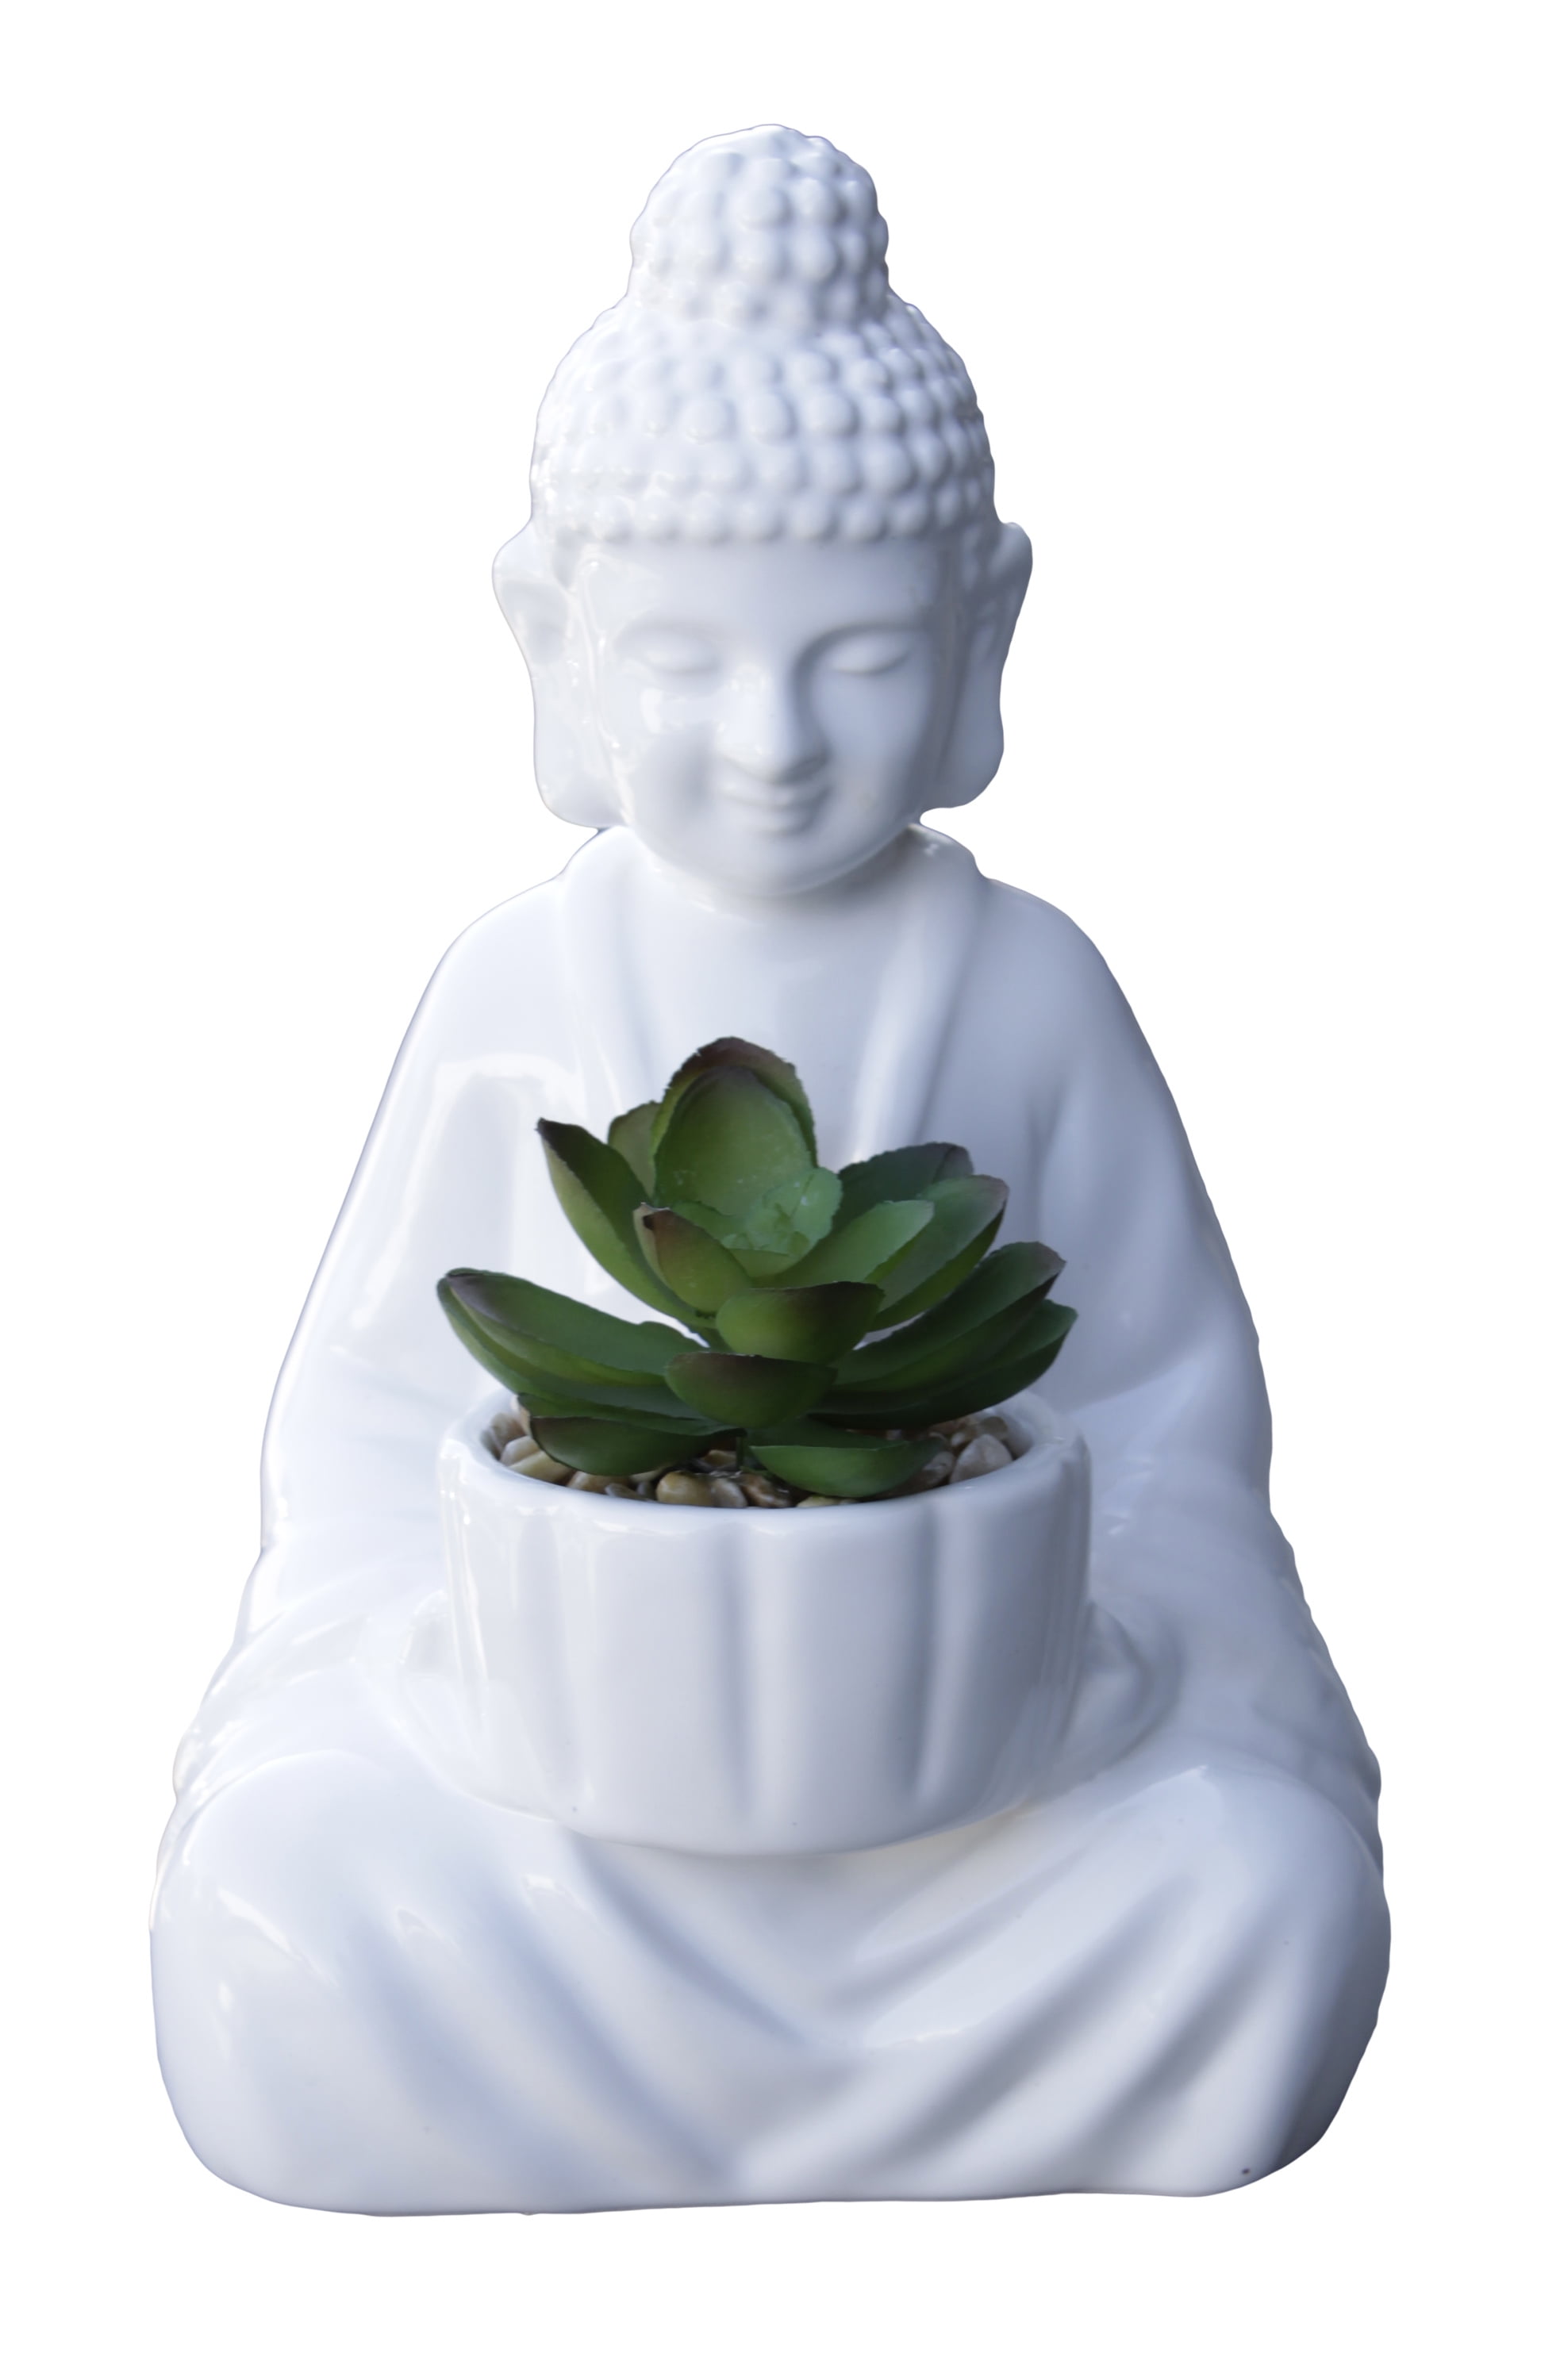 Mainstays 8.5" Artificial Succulent Arrangement in White Buddha Ceramic Planter - Walmart.com